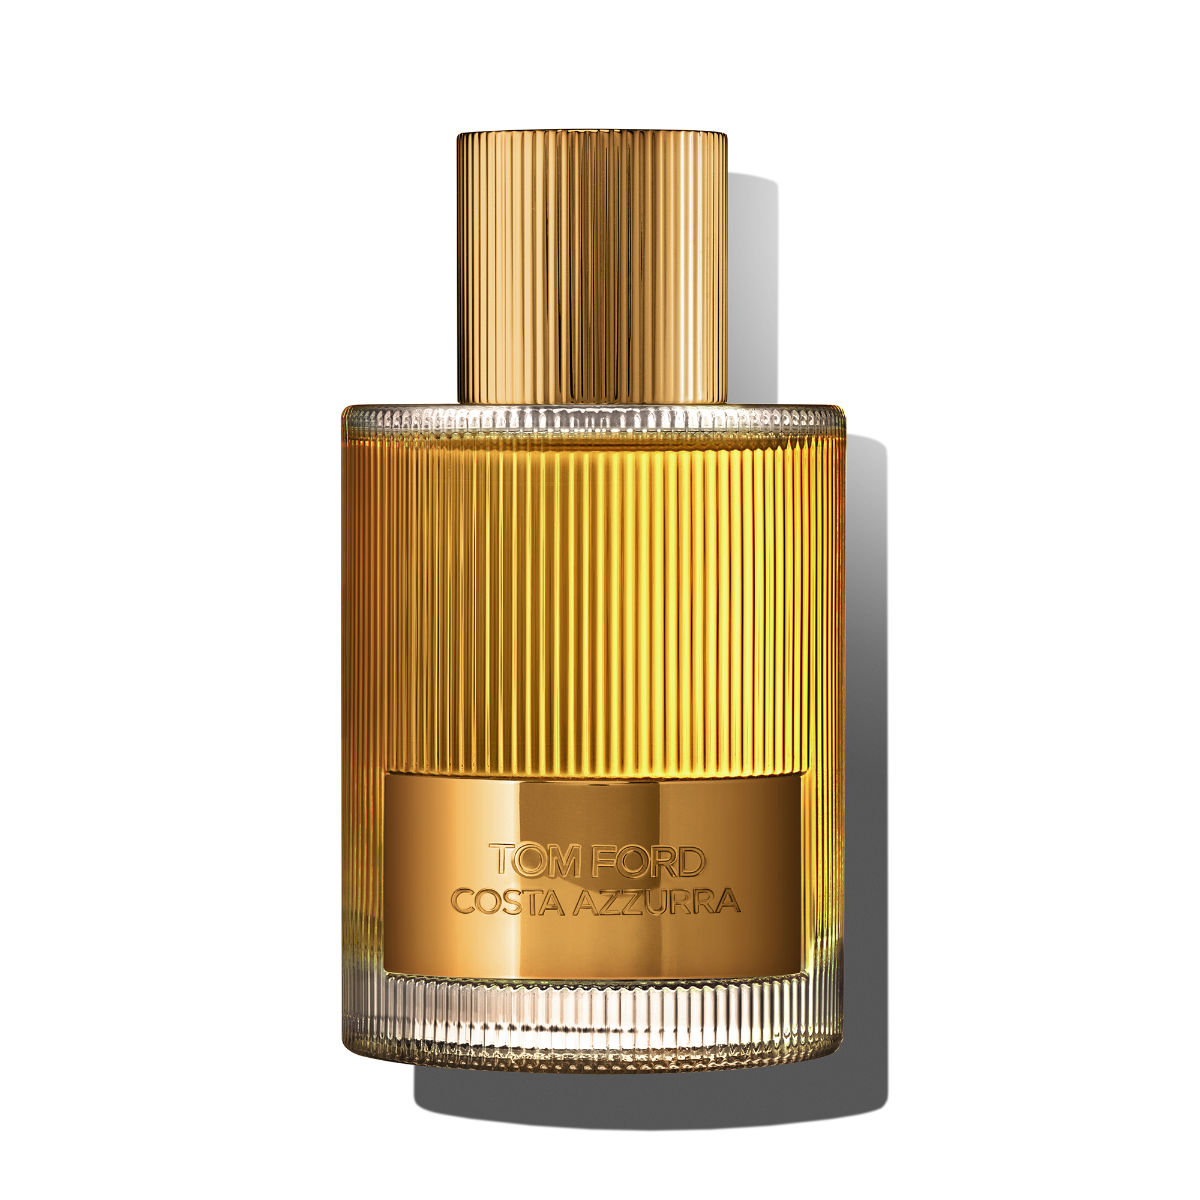 TOM FORD Presents The Debut Of A New Signature Eau De Parfum, COSTA AZZURRA  - Luxferity Magazine